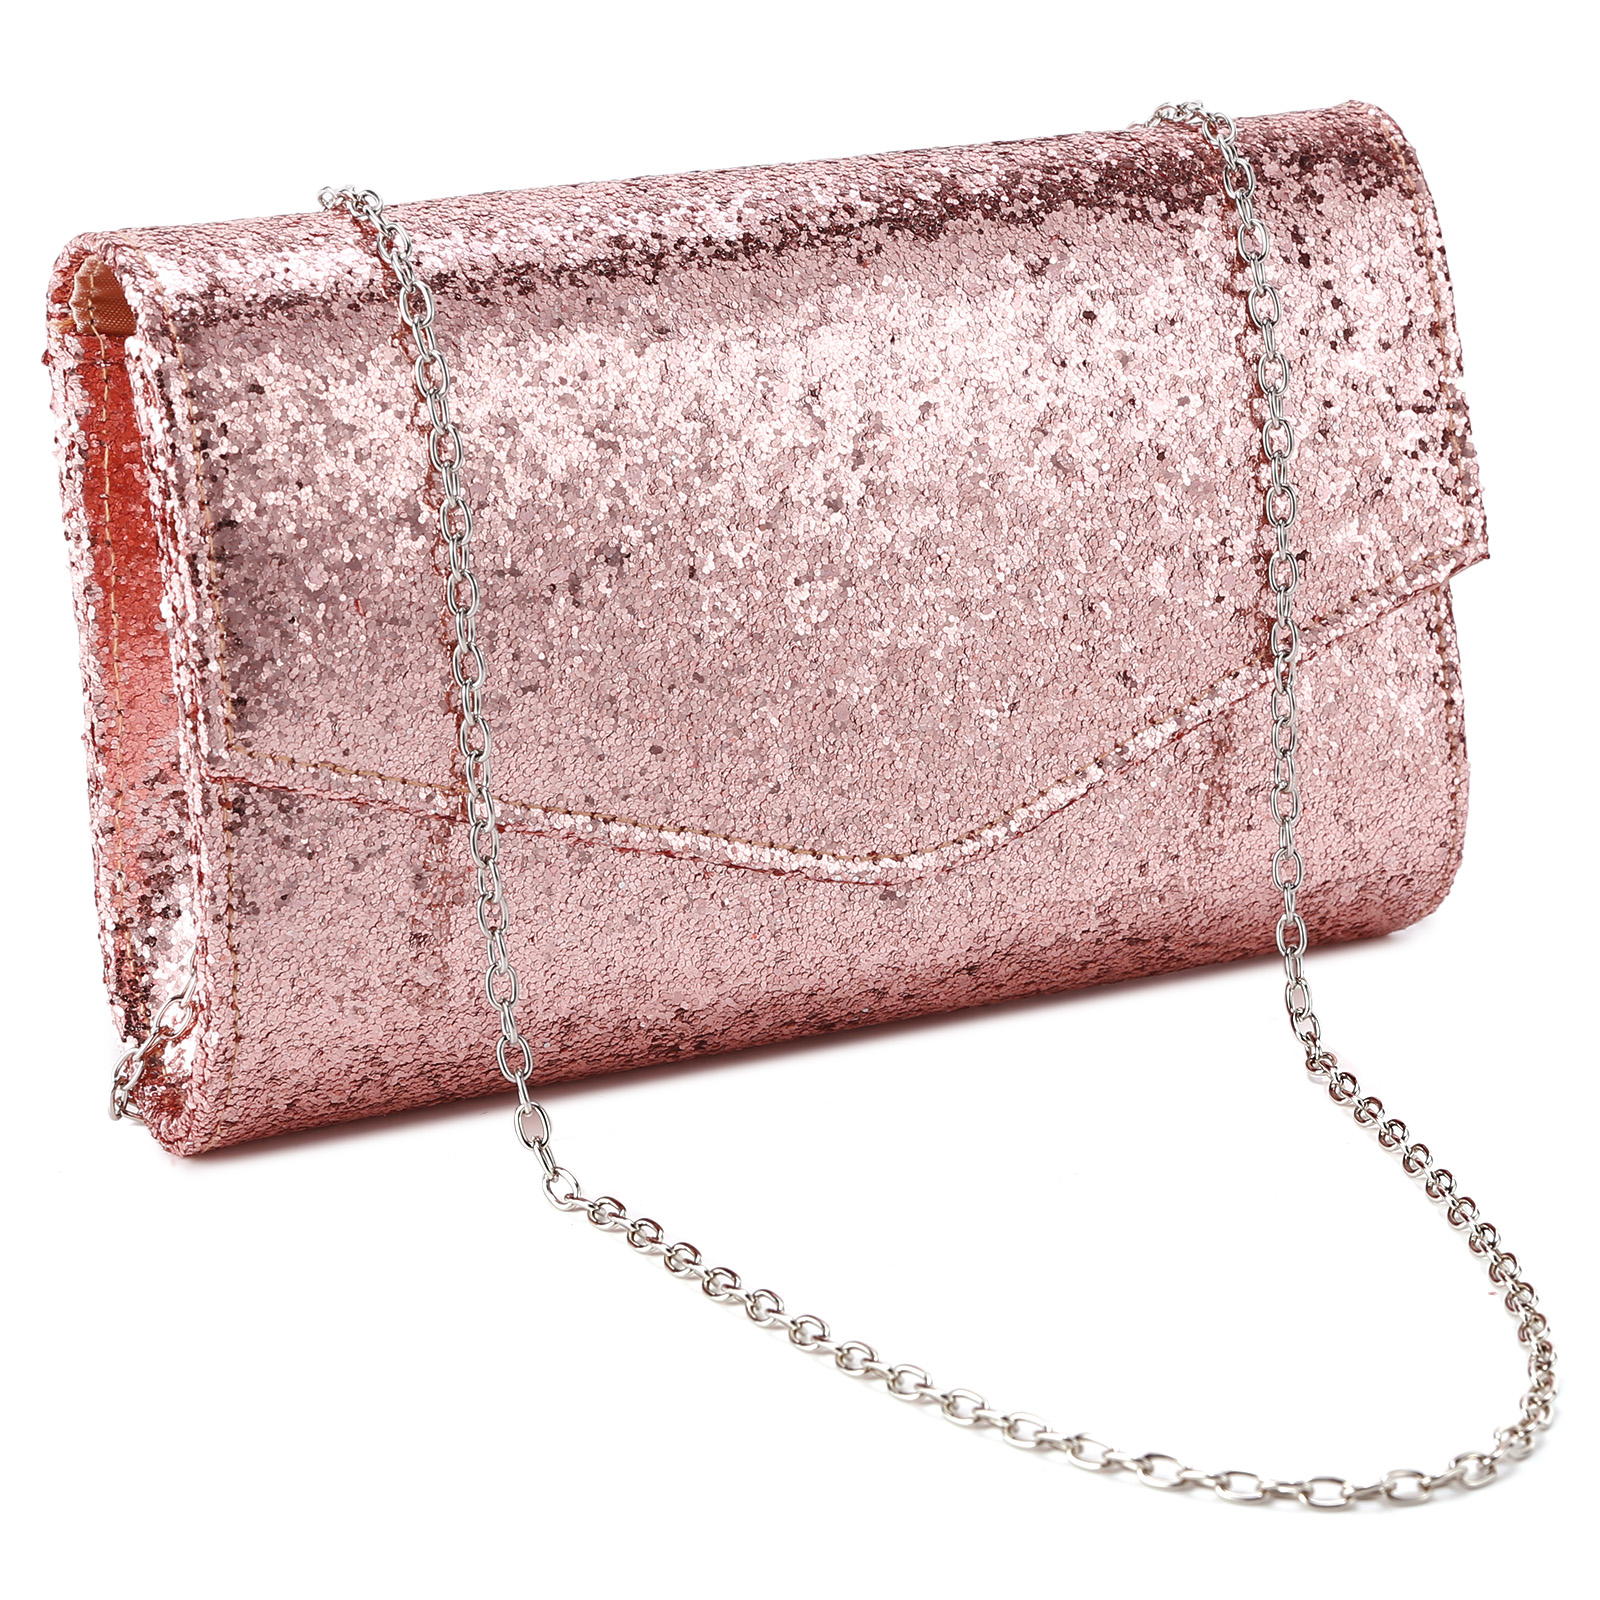 Premium Metallic Glitter Flap Clutch Evening Bag Handbag 8 Colors | eBay